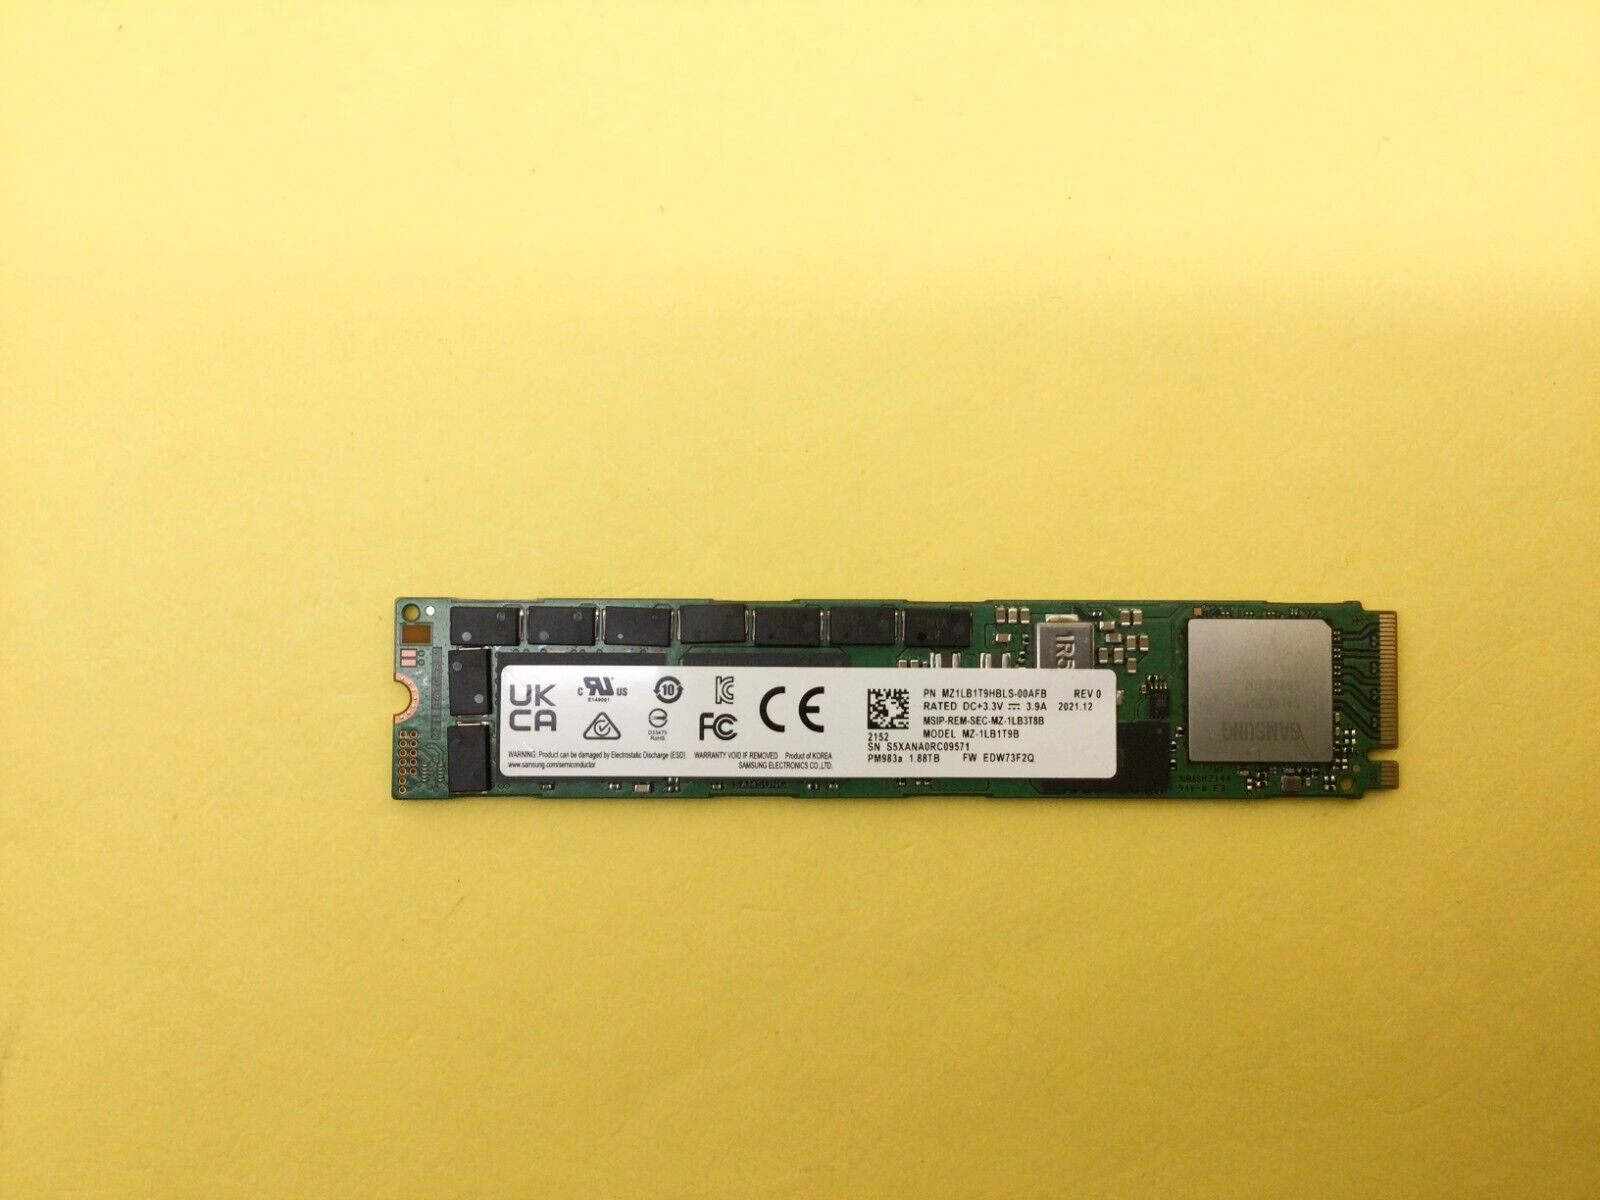 Samsung PM983a 1.92TB NVMe PCIe M.2 22110 1.88TB SSD MZ-1LB1T9B